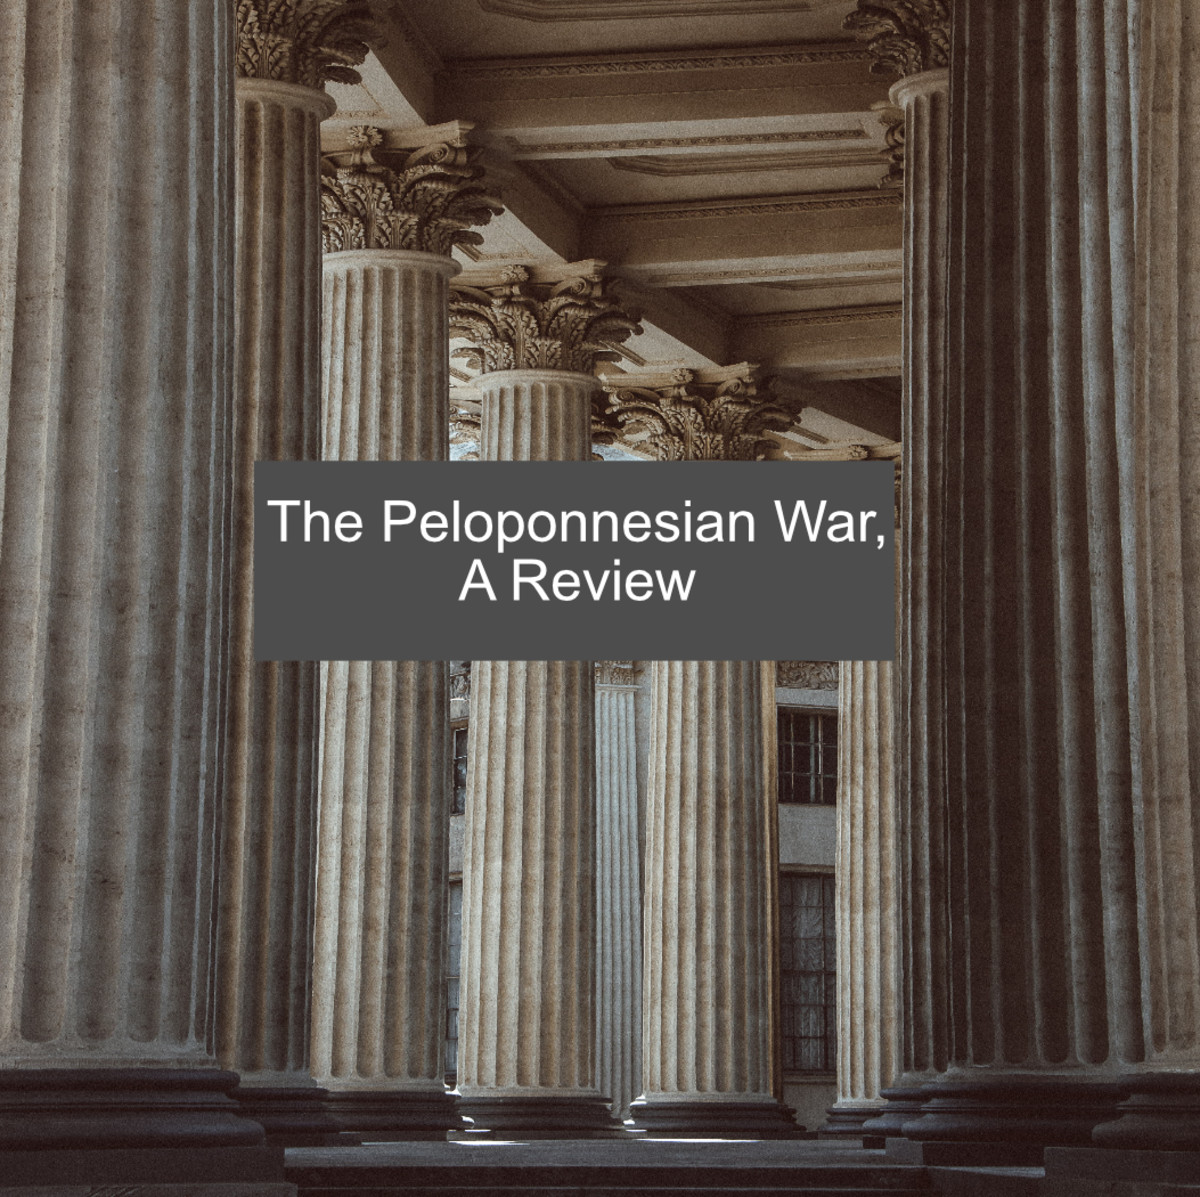 The Peloponnesian War, a Review